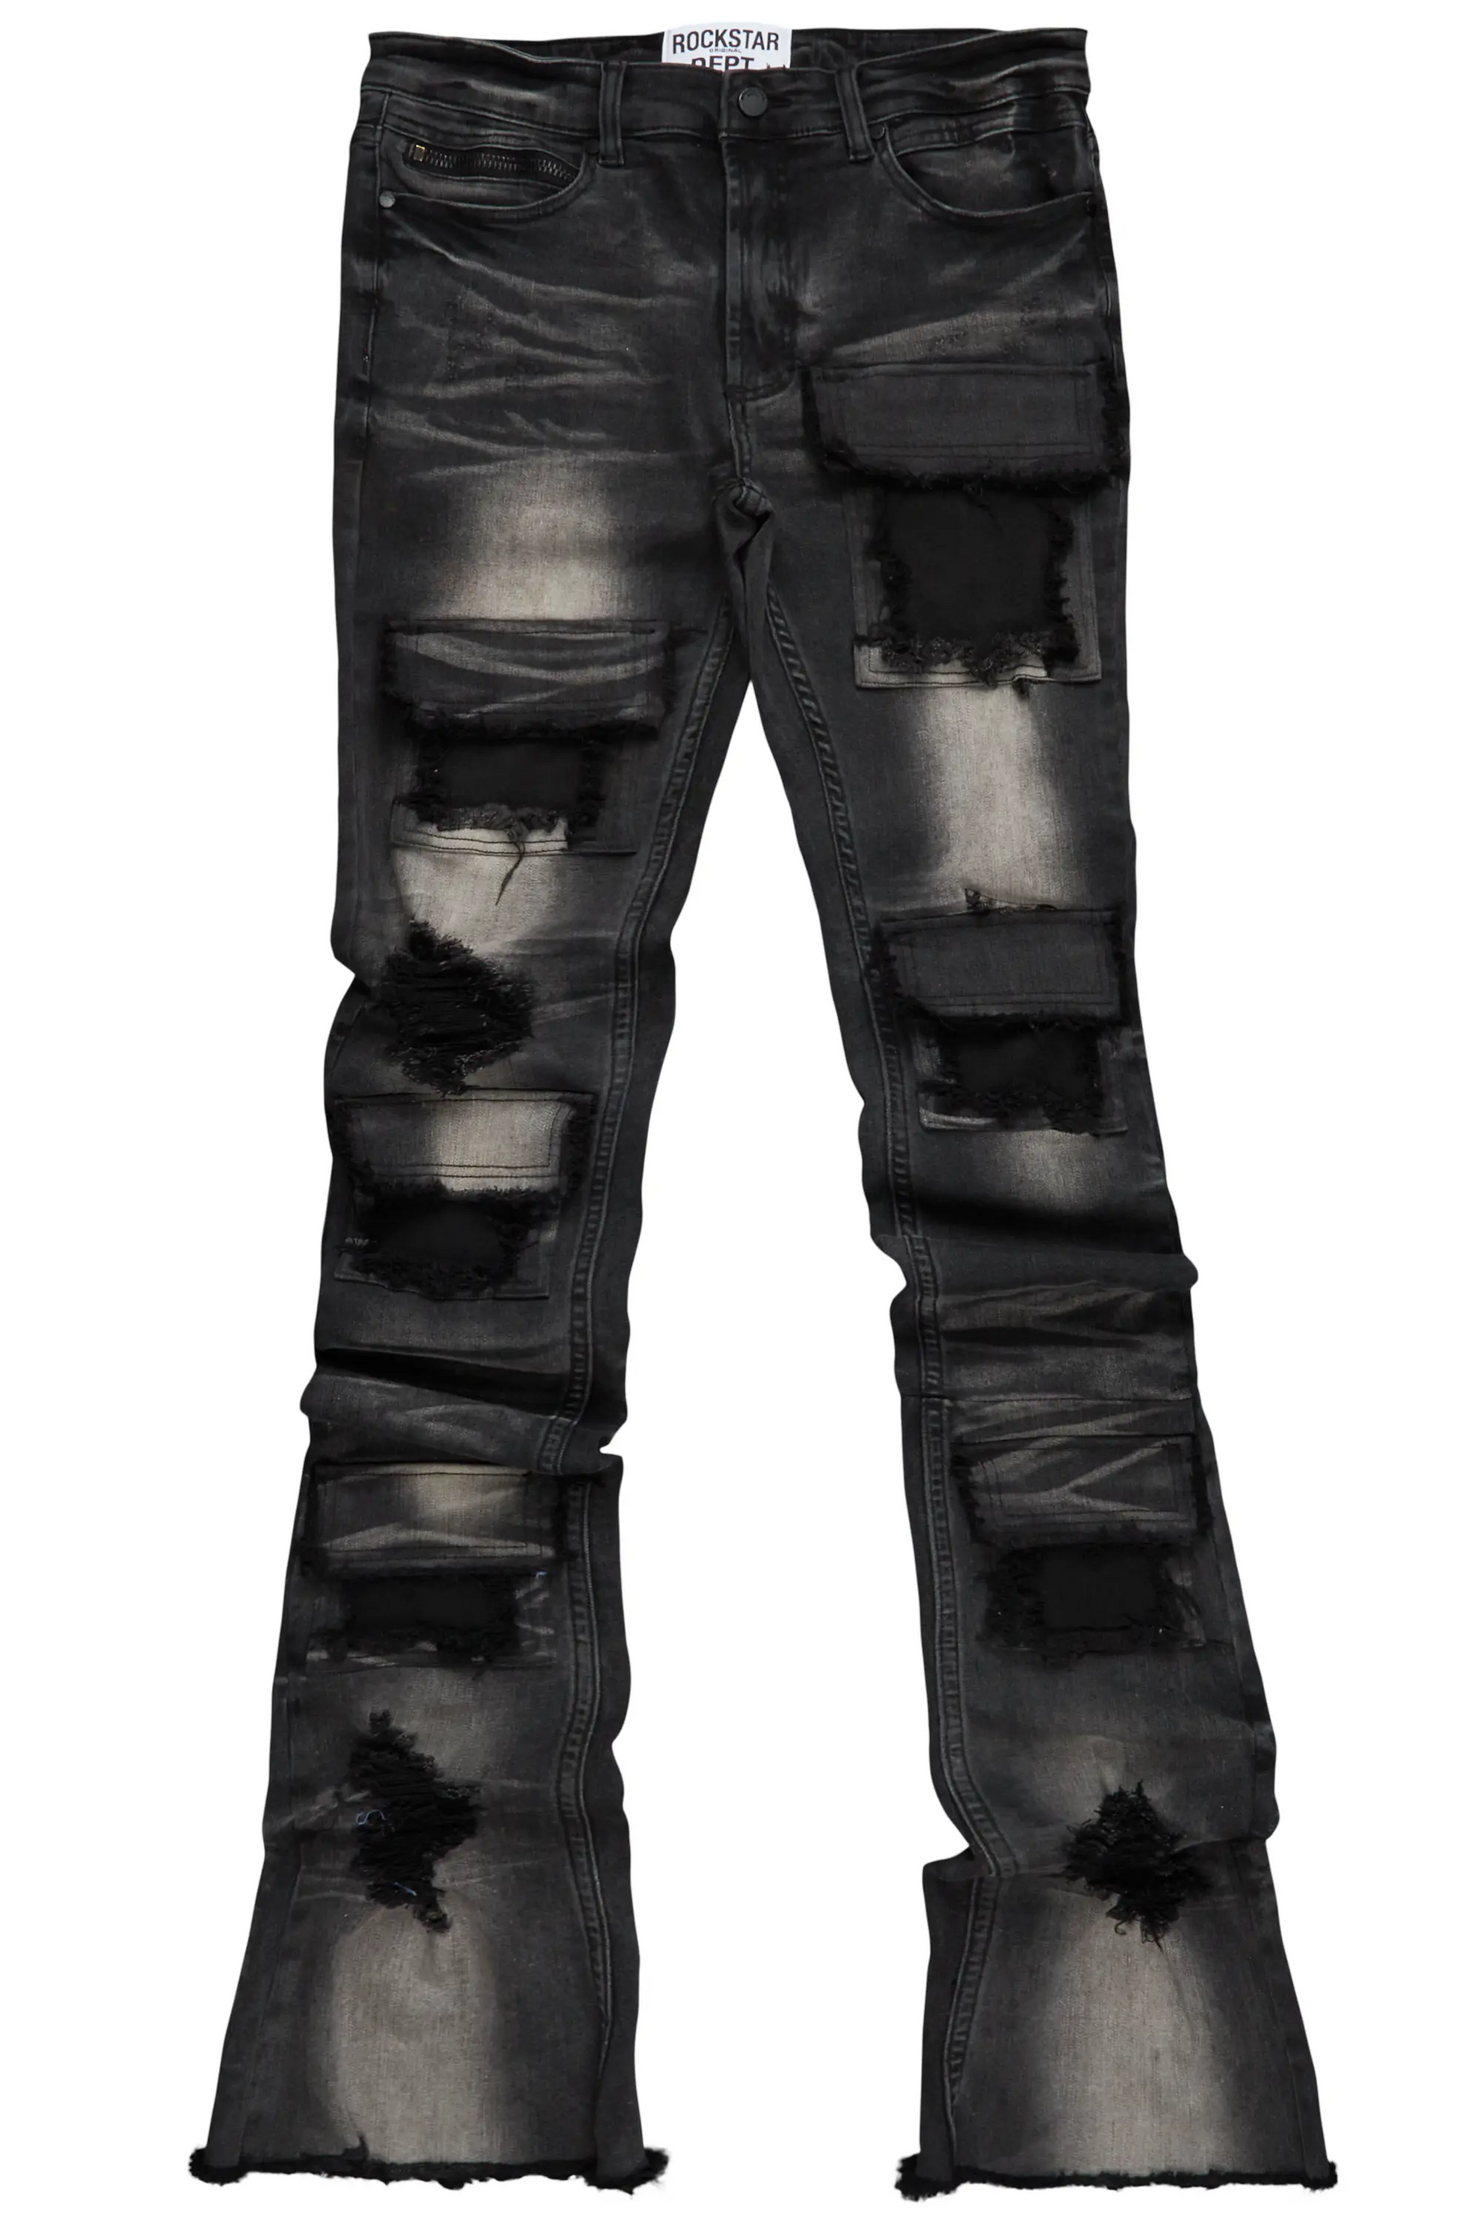 Pooja Black Super Stacked Flare Jean– Rockstar Original